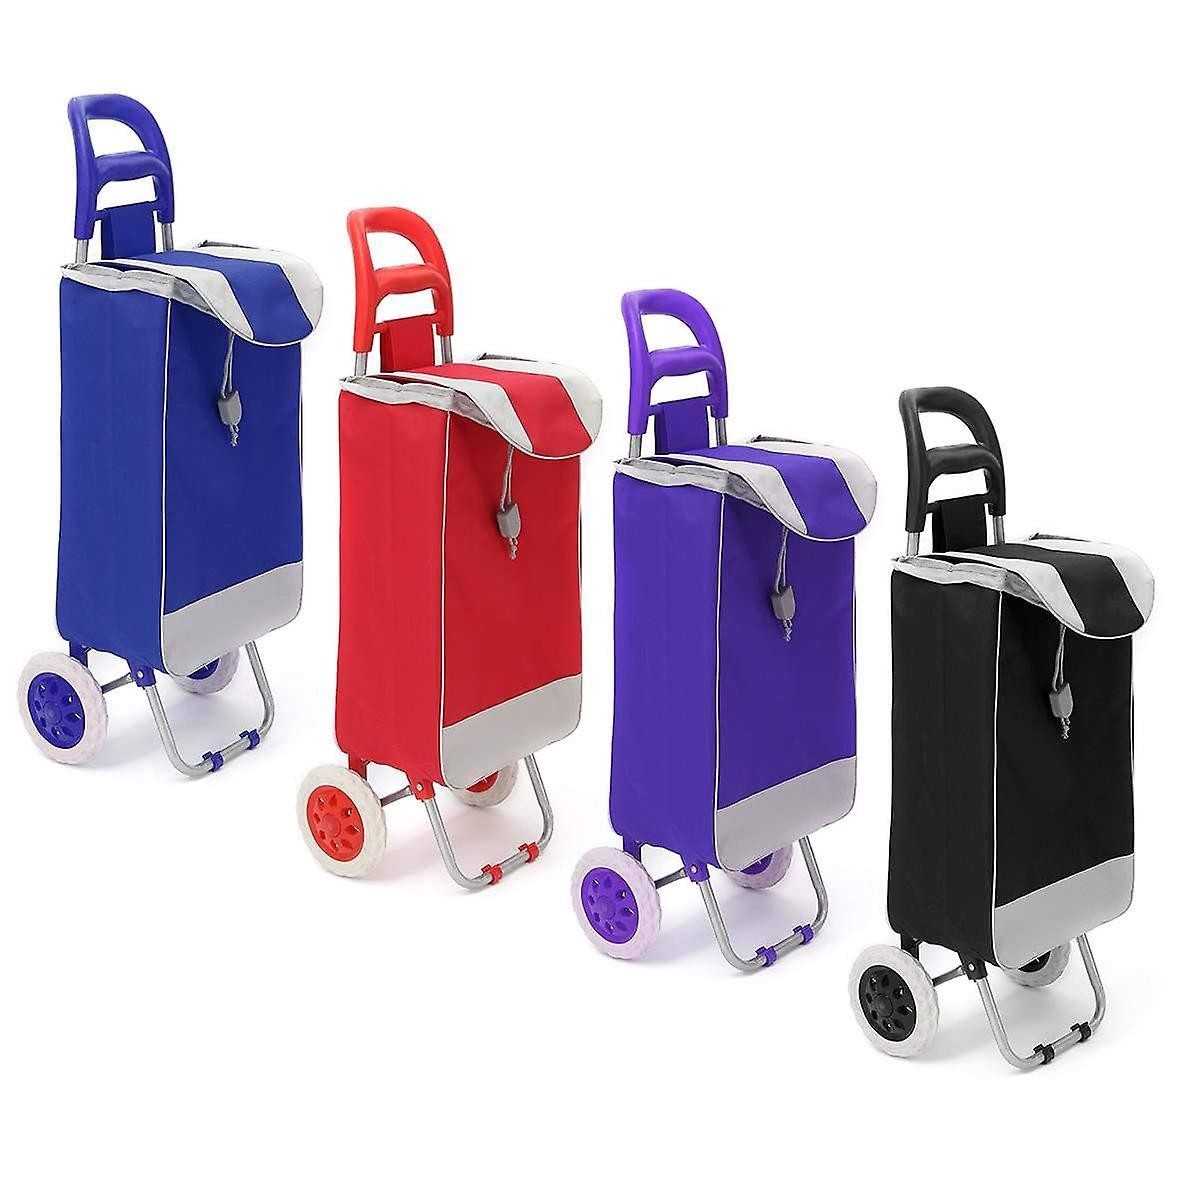 45l foldable shopping trolley bag on wheels push tote cart